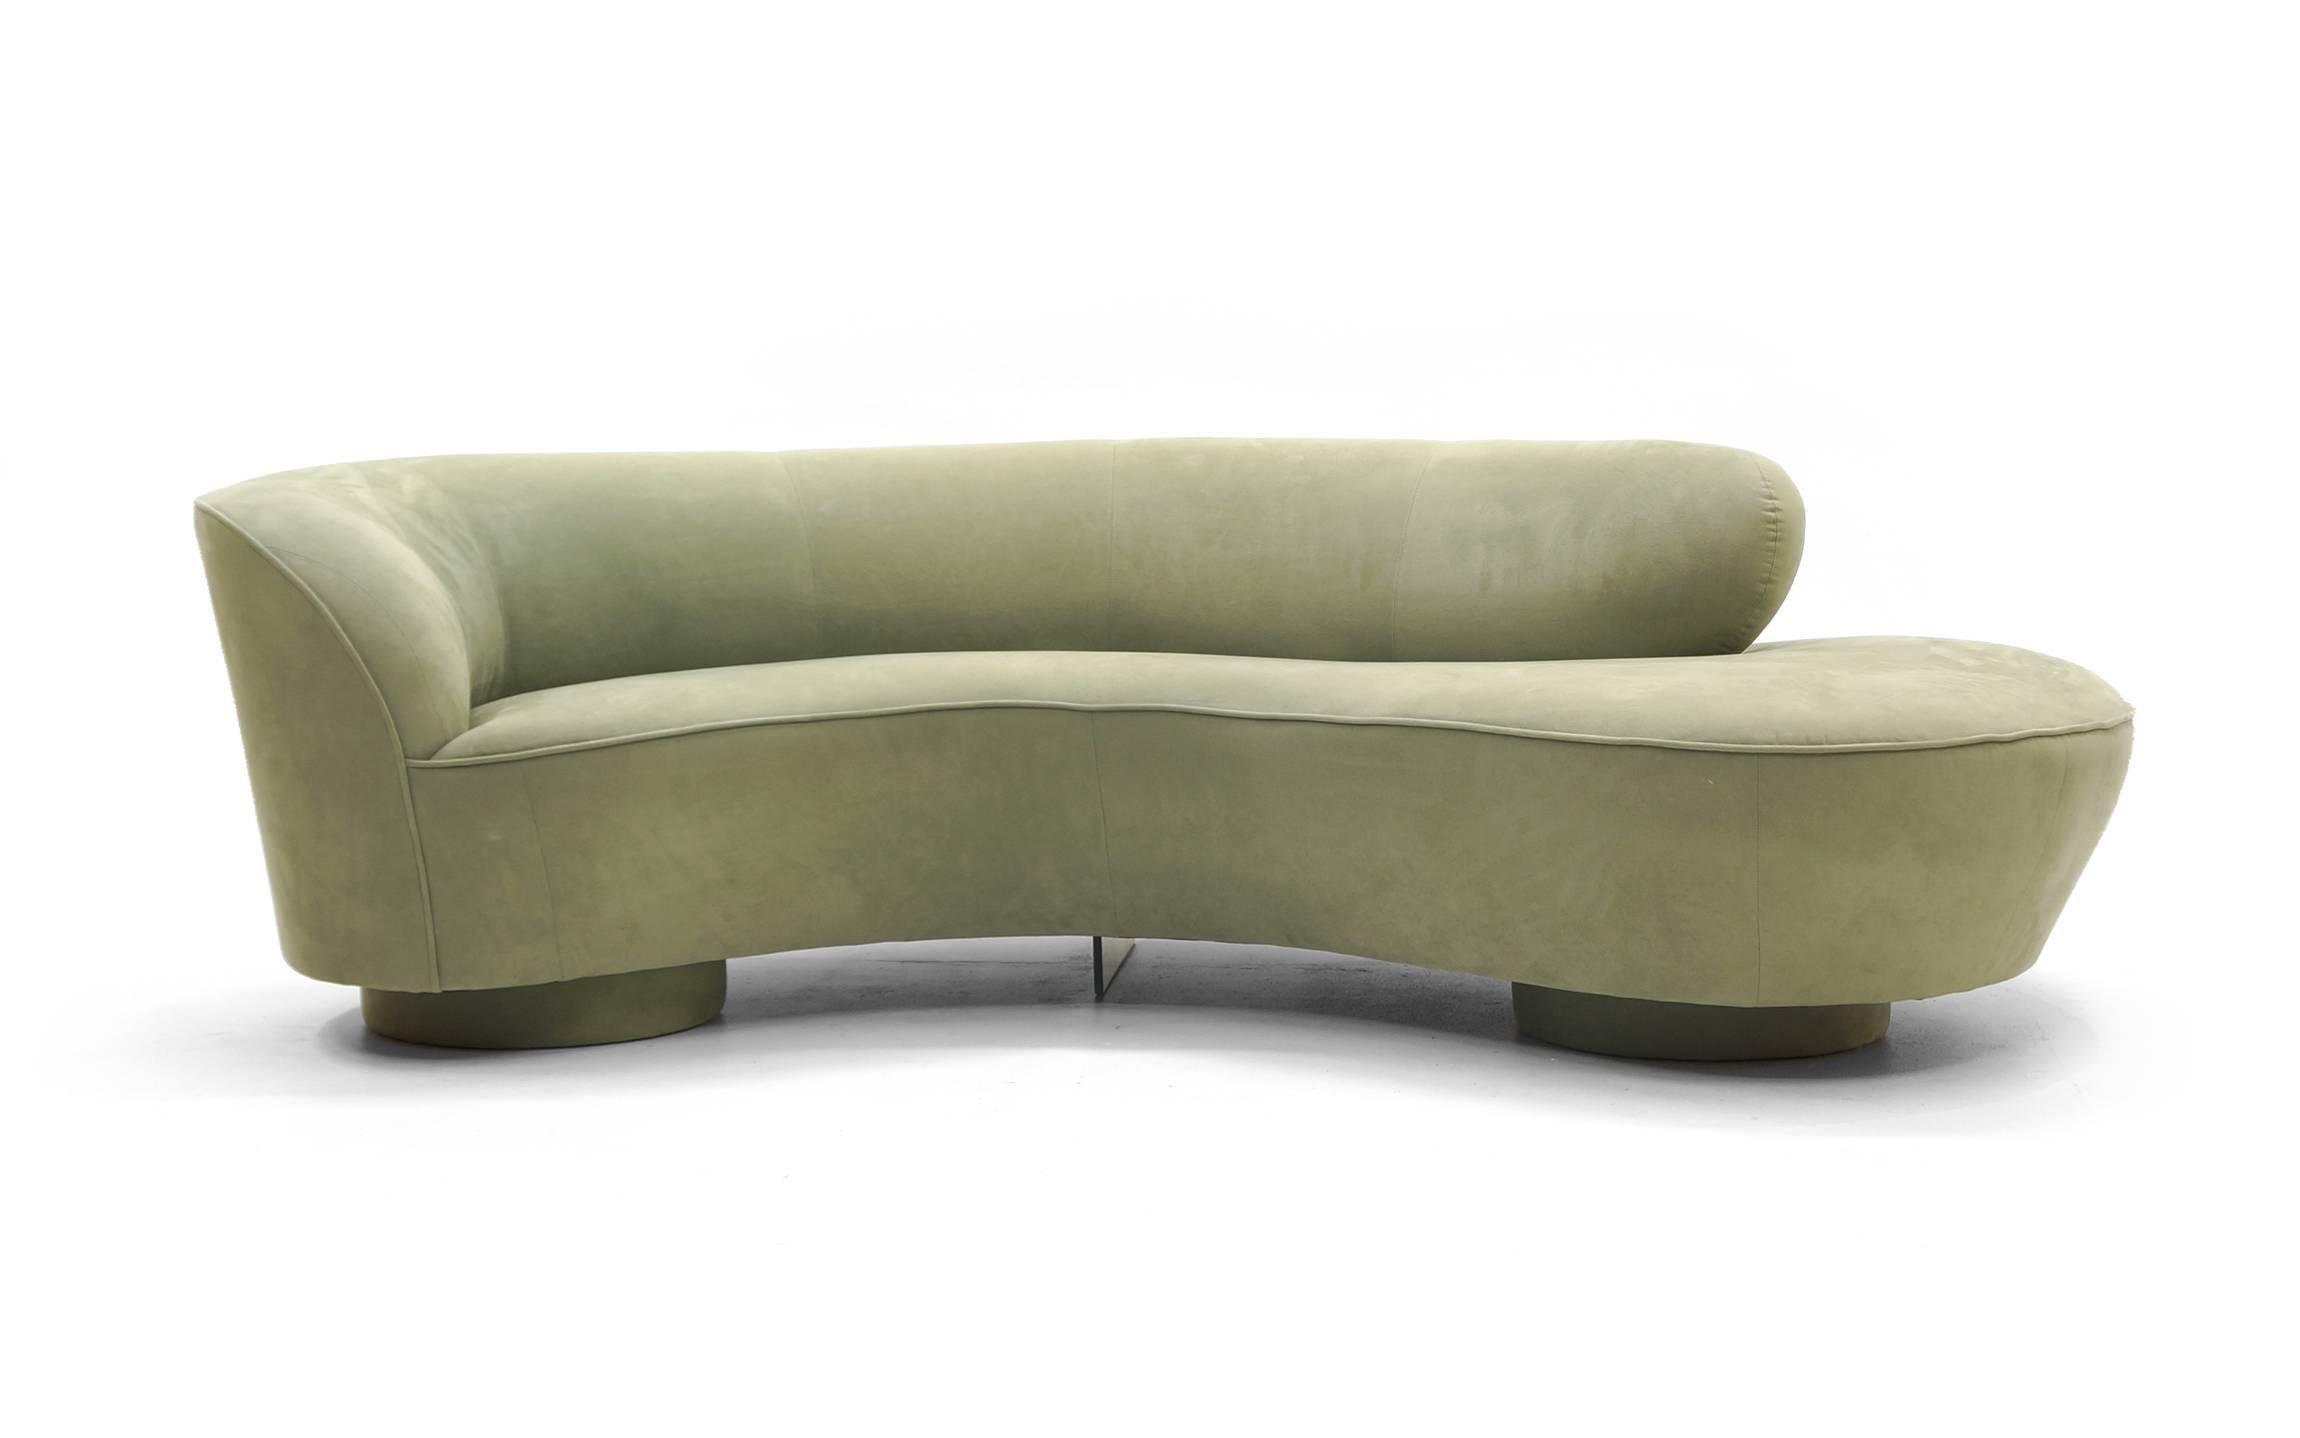 Vladimir Kagan sofa for Directional. Original green gray Ultrasuede in excellent condition. Classic Kagan design.